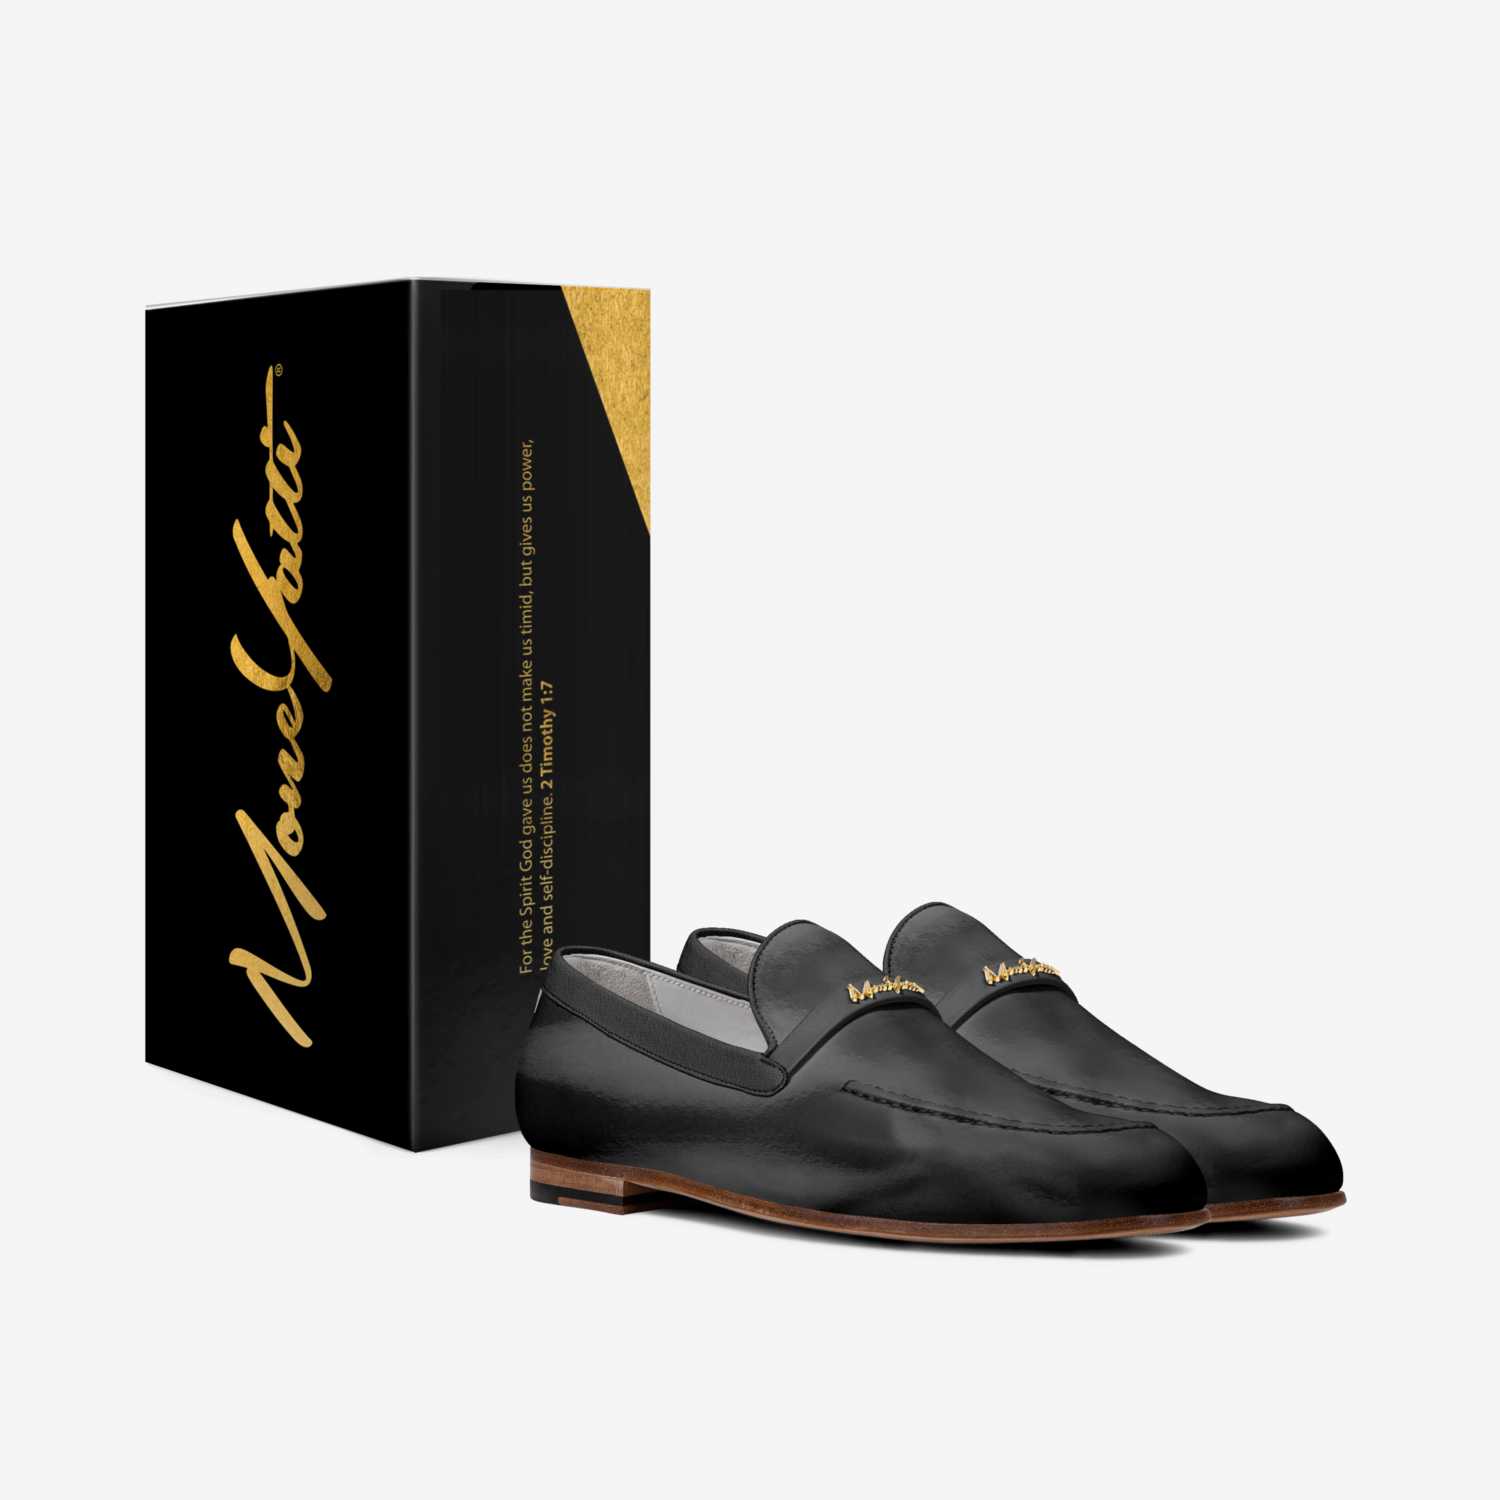 ElegantDrip 004 custom made in Italy shoes by Moneyatti Brand | Box view